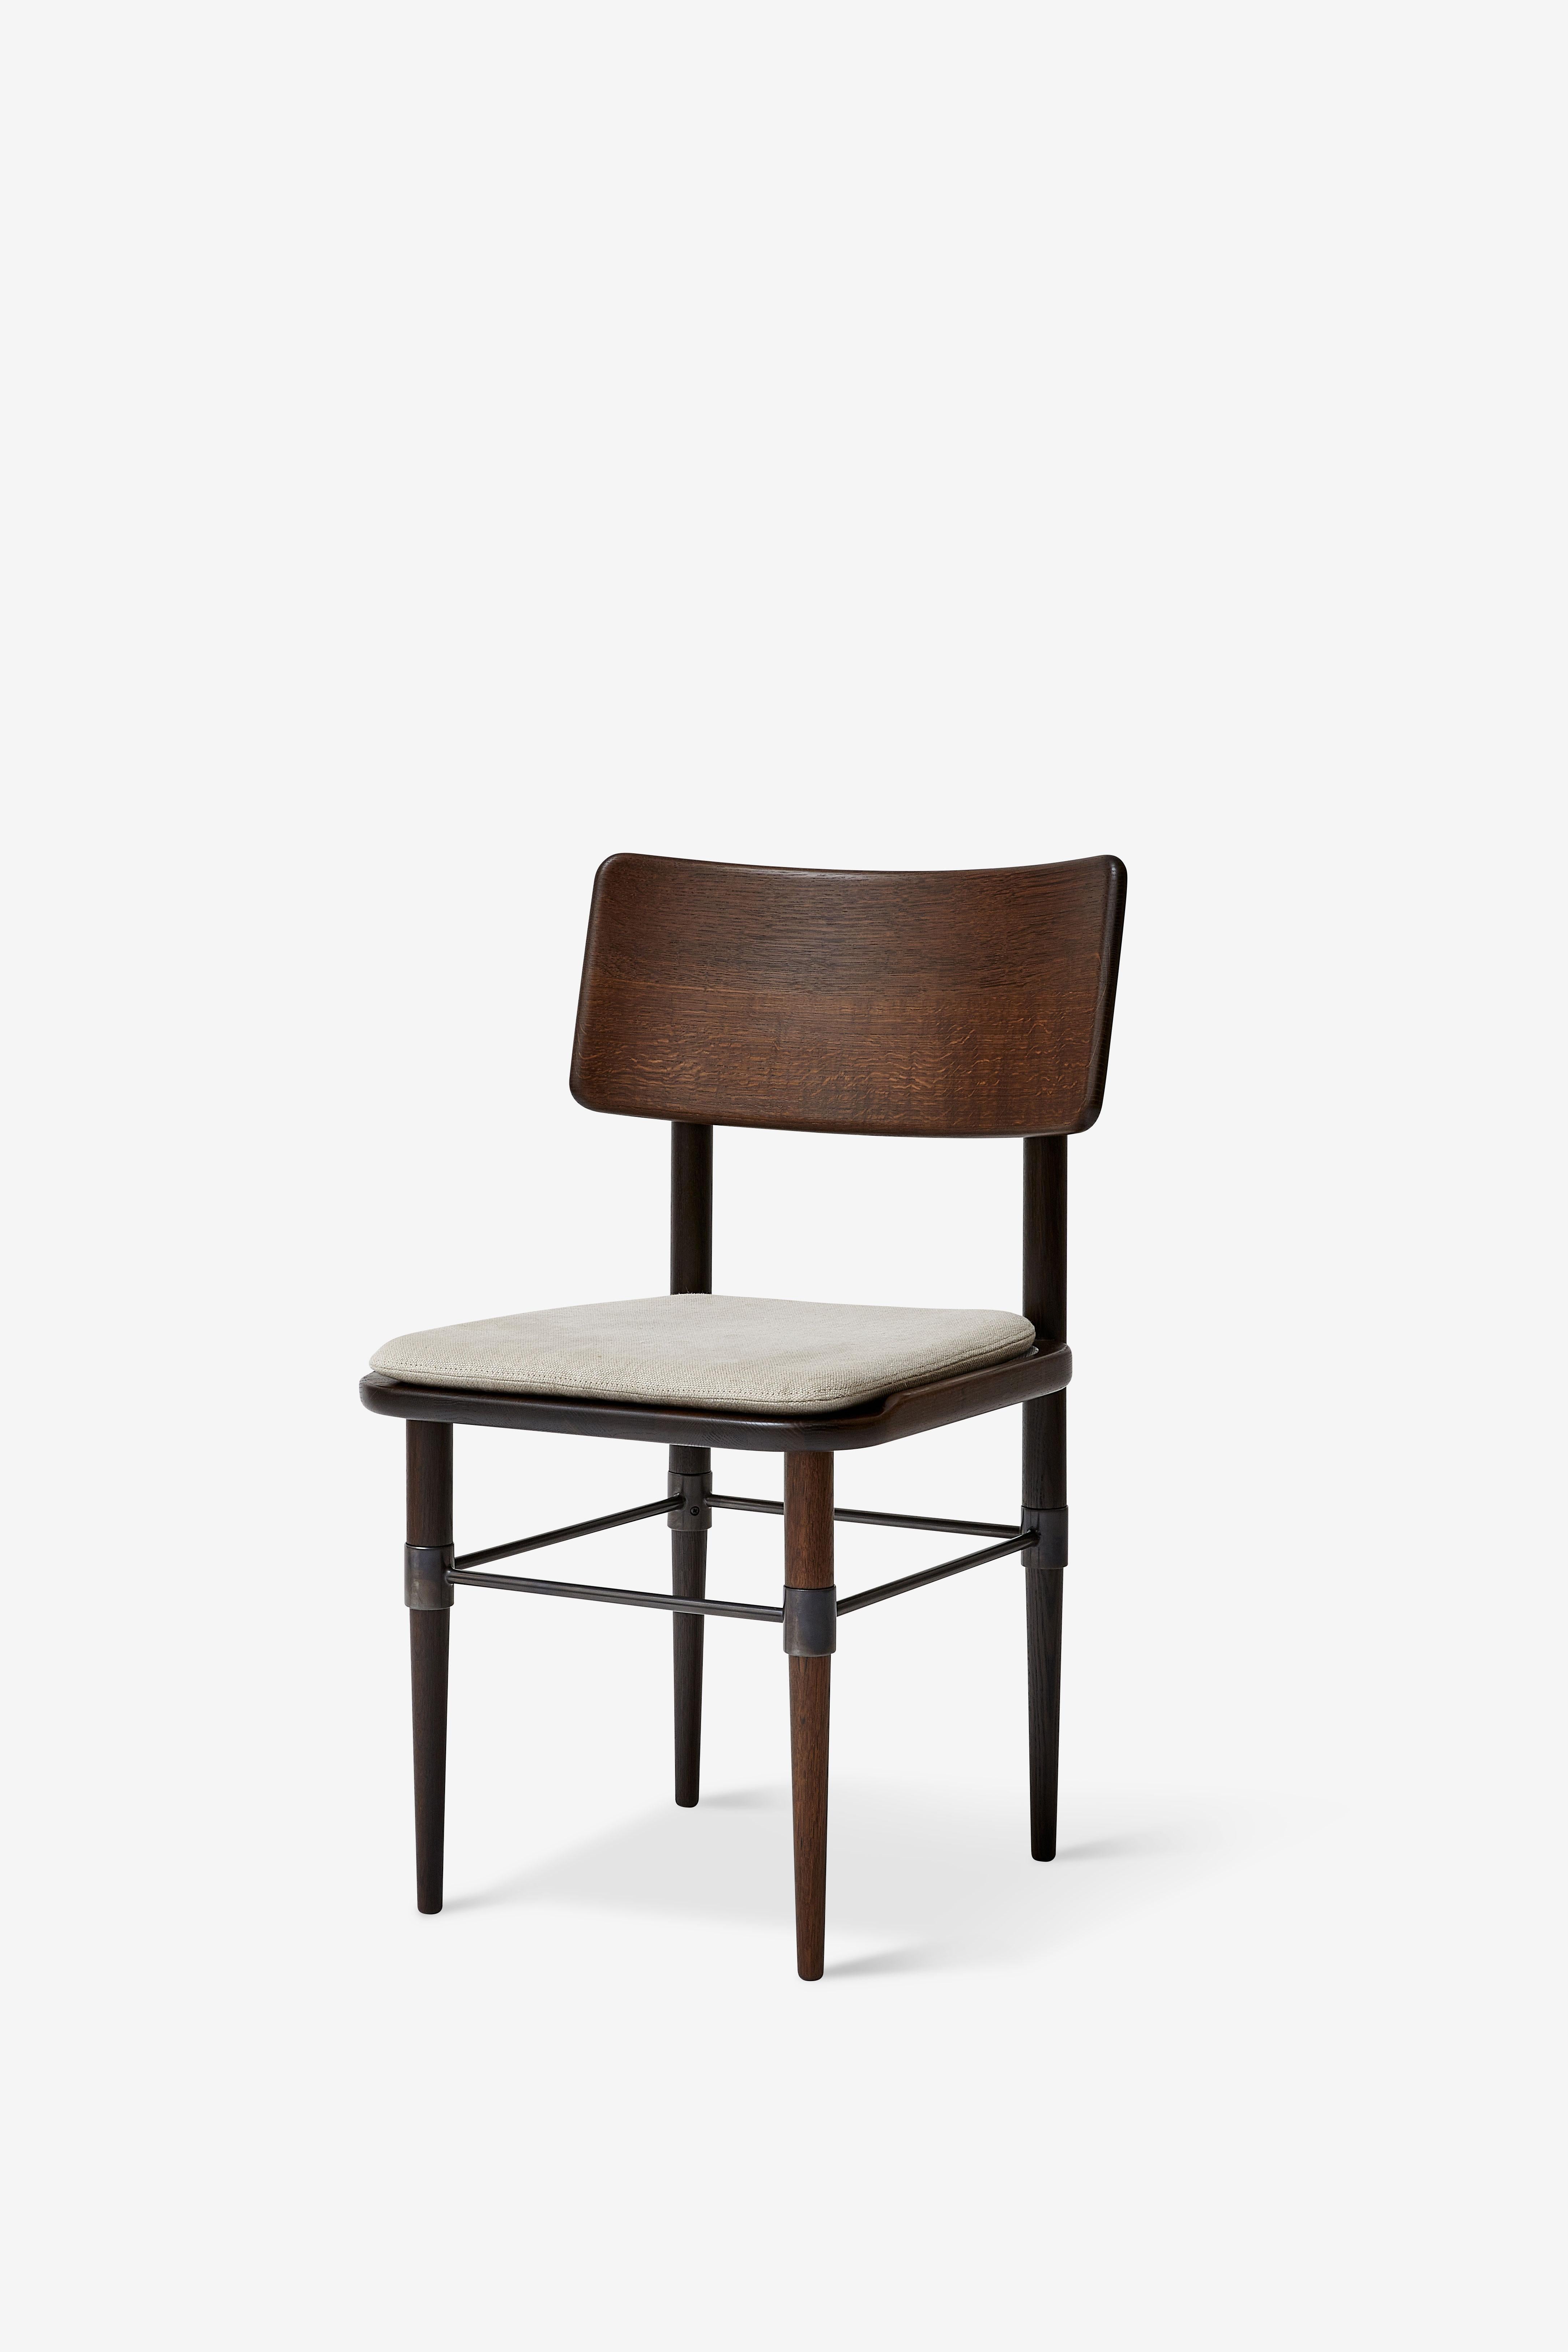 MG101 Dining chair in smoked oak by Malte Gormsen Design by Space Copenhagen For Sale 1